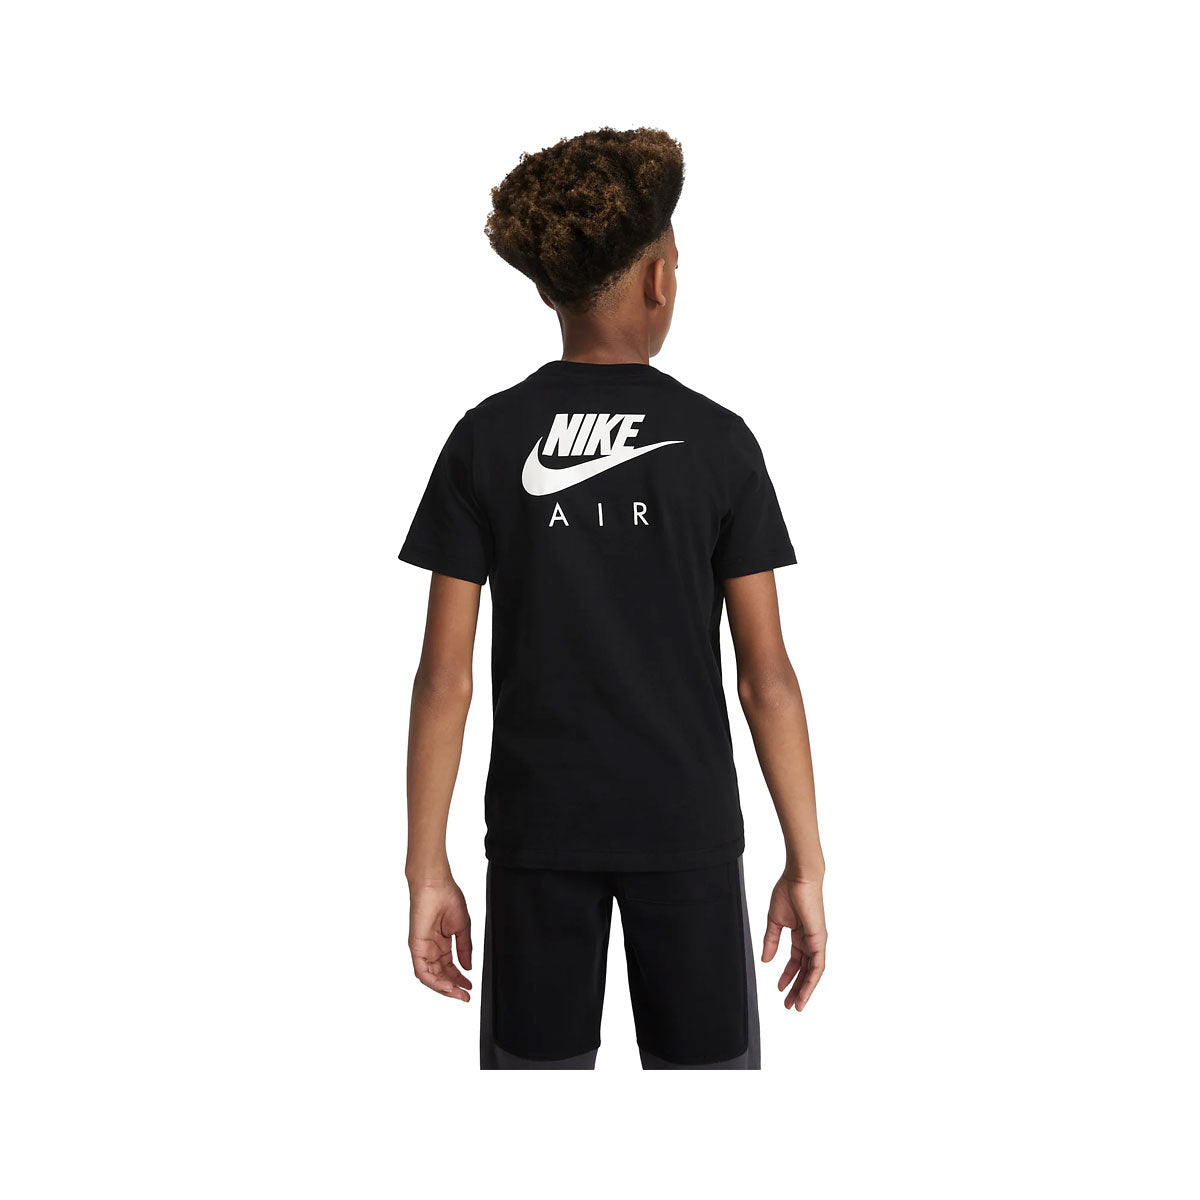 Nike KIDS Air Big (Boys) T-Shirt